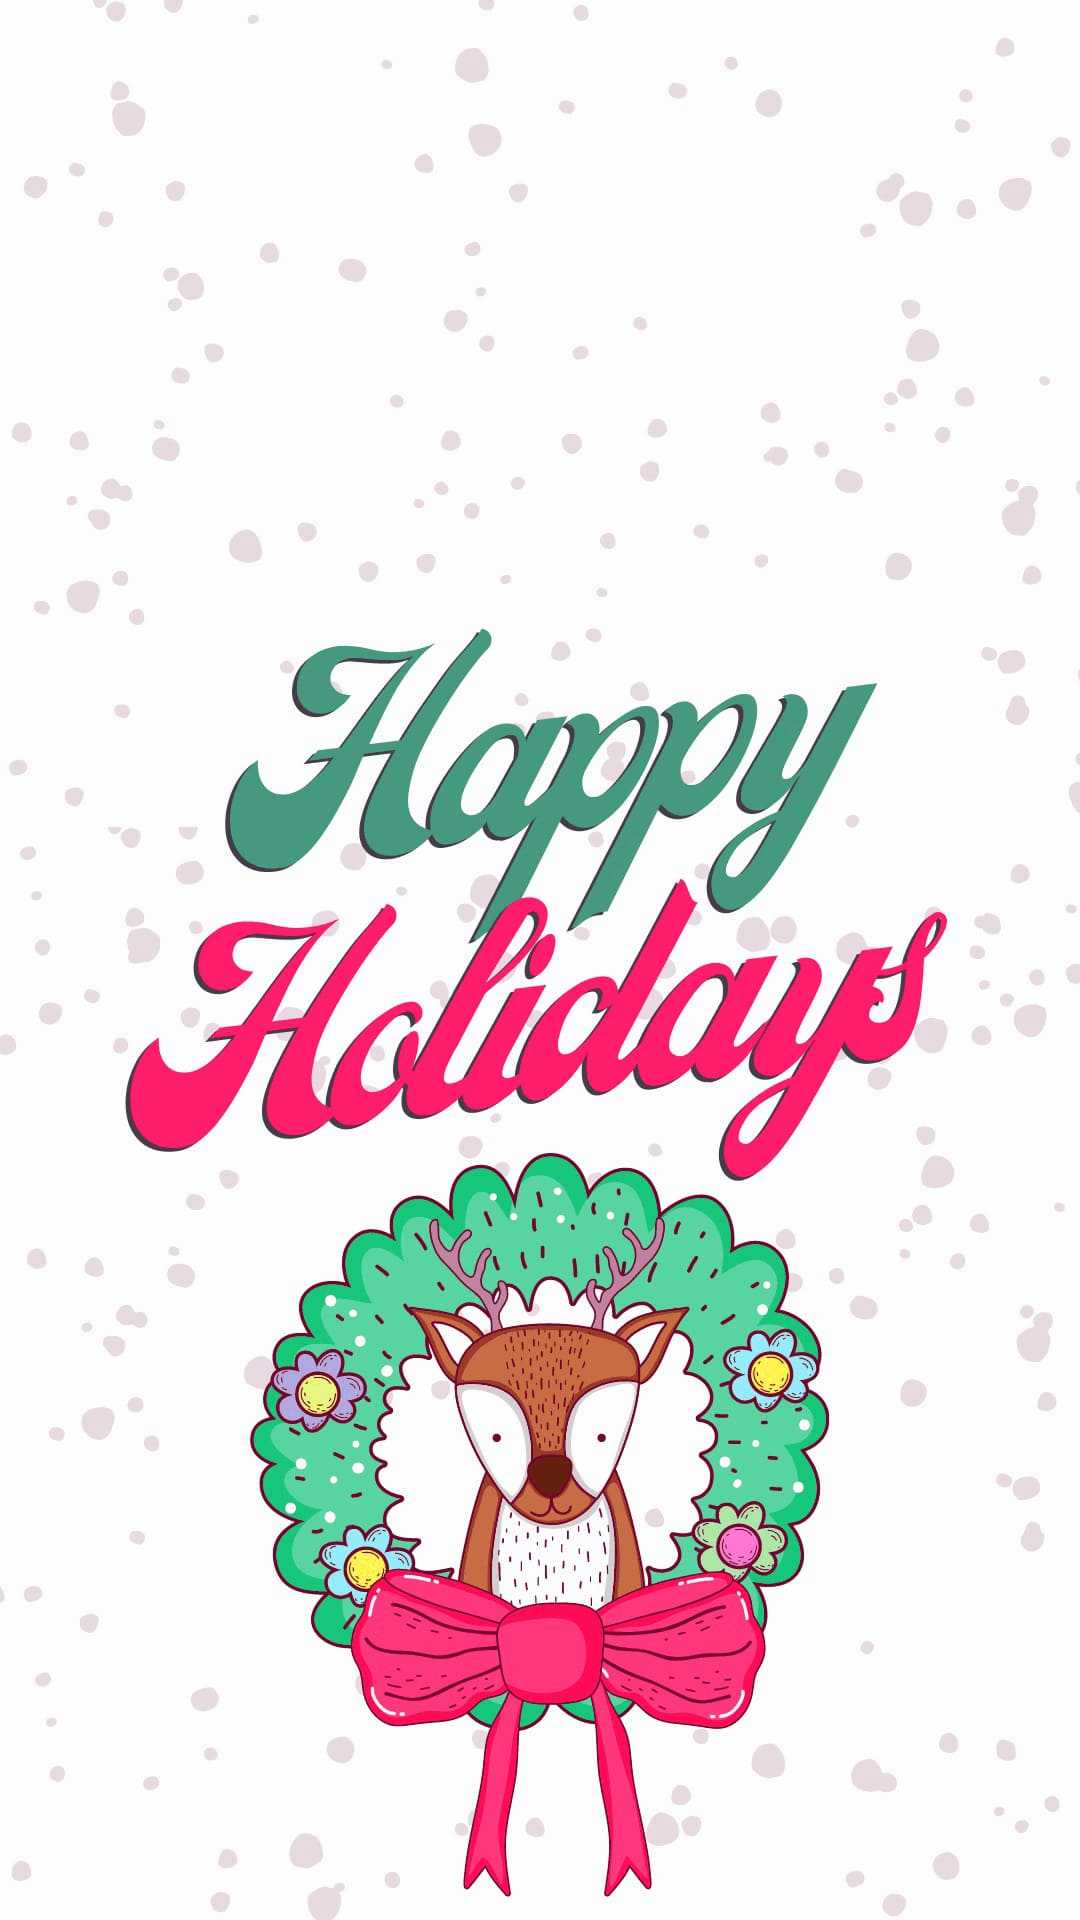 Happy Holidays Wallpaper - iXpap